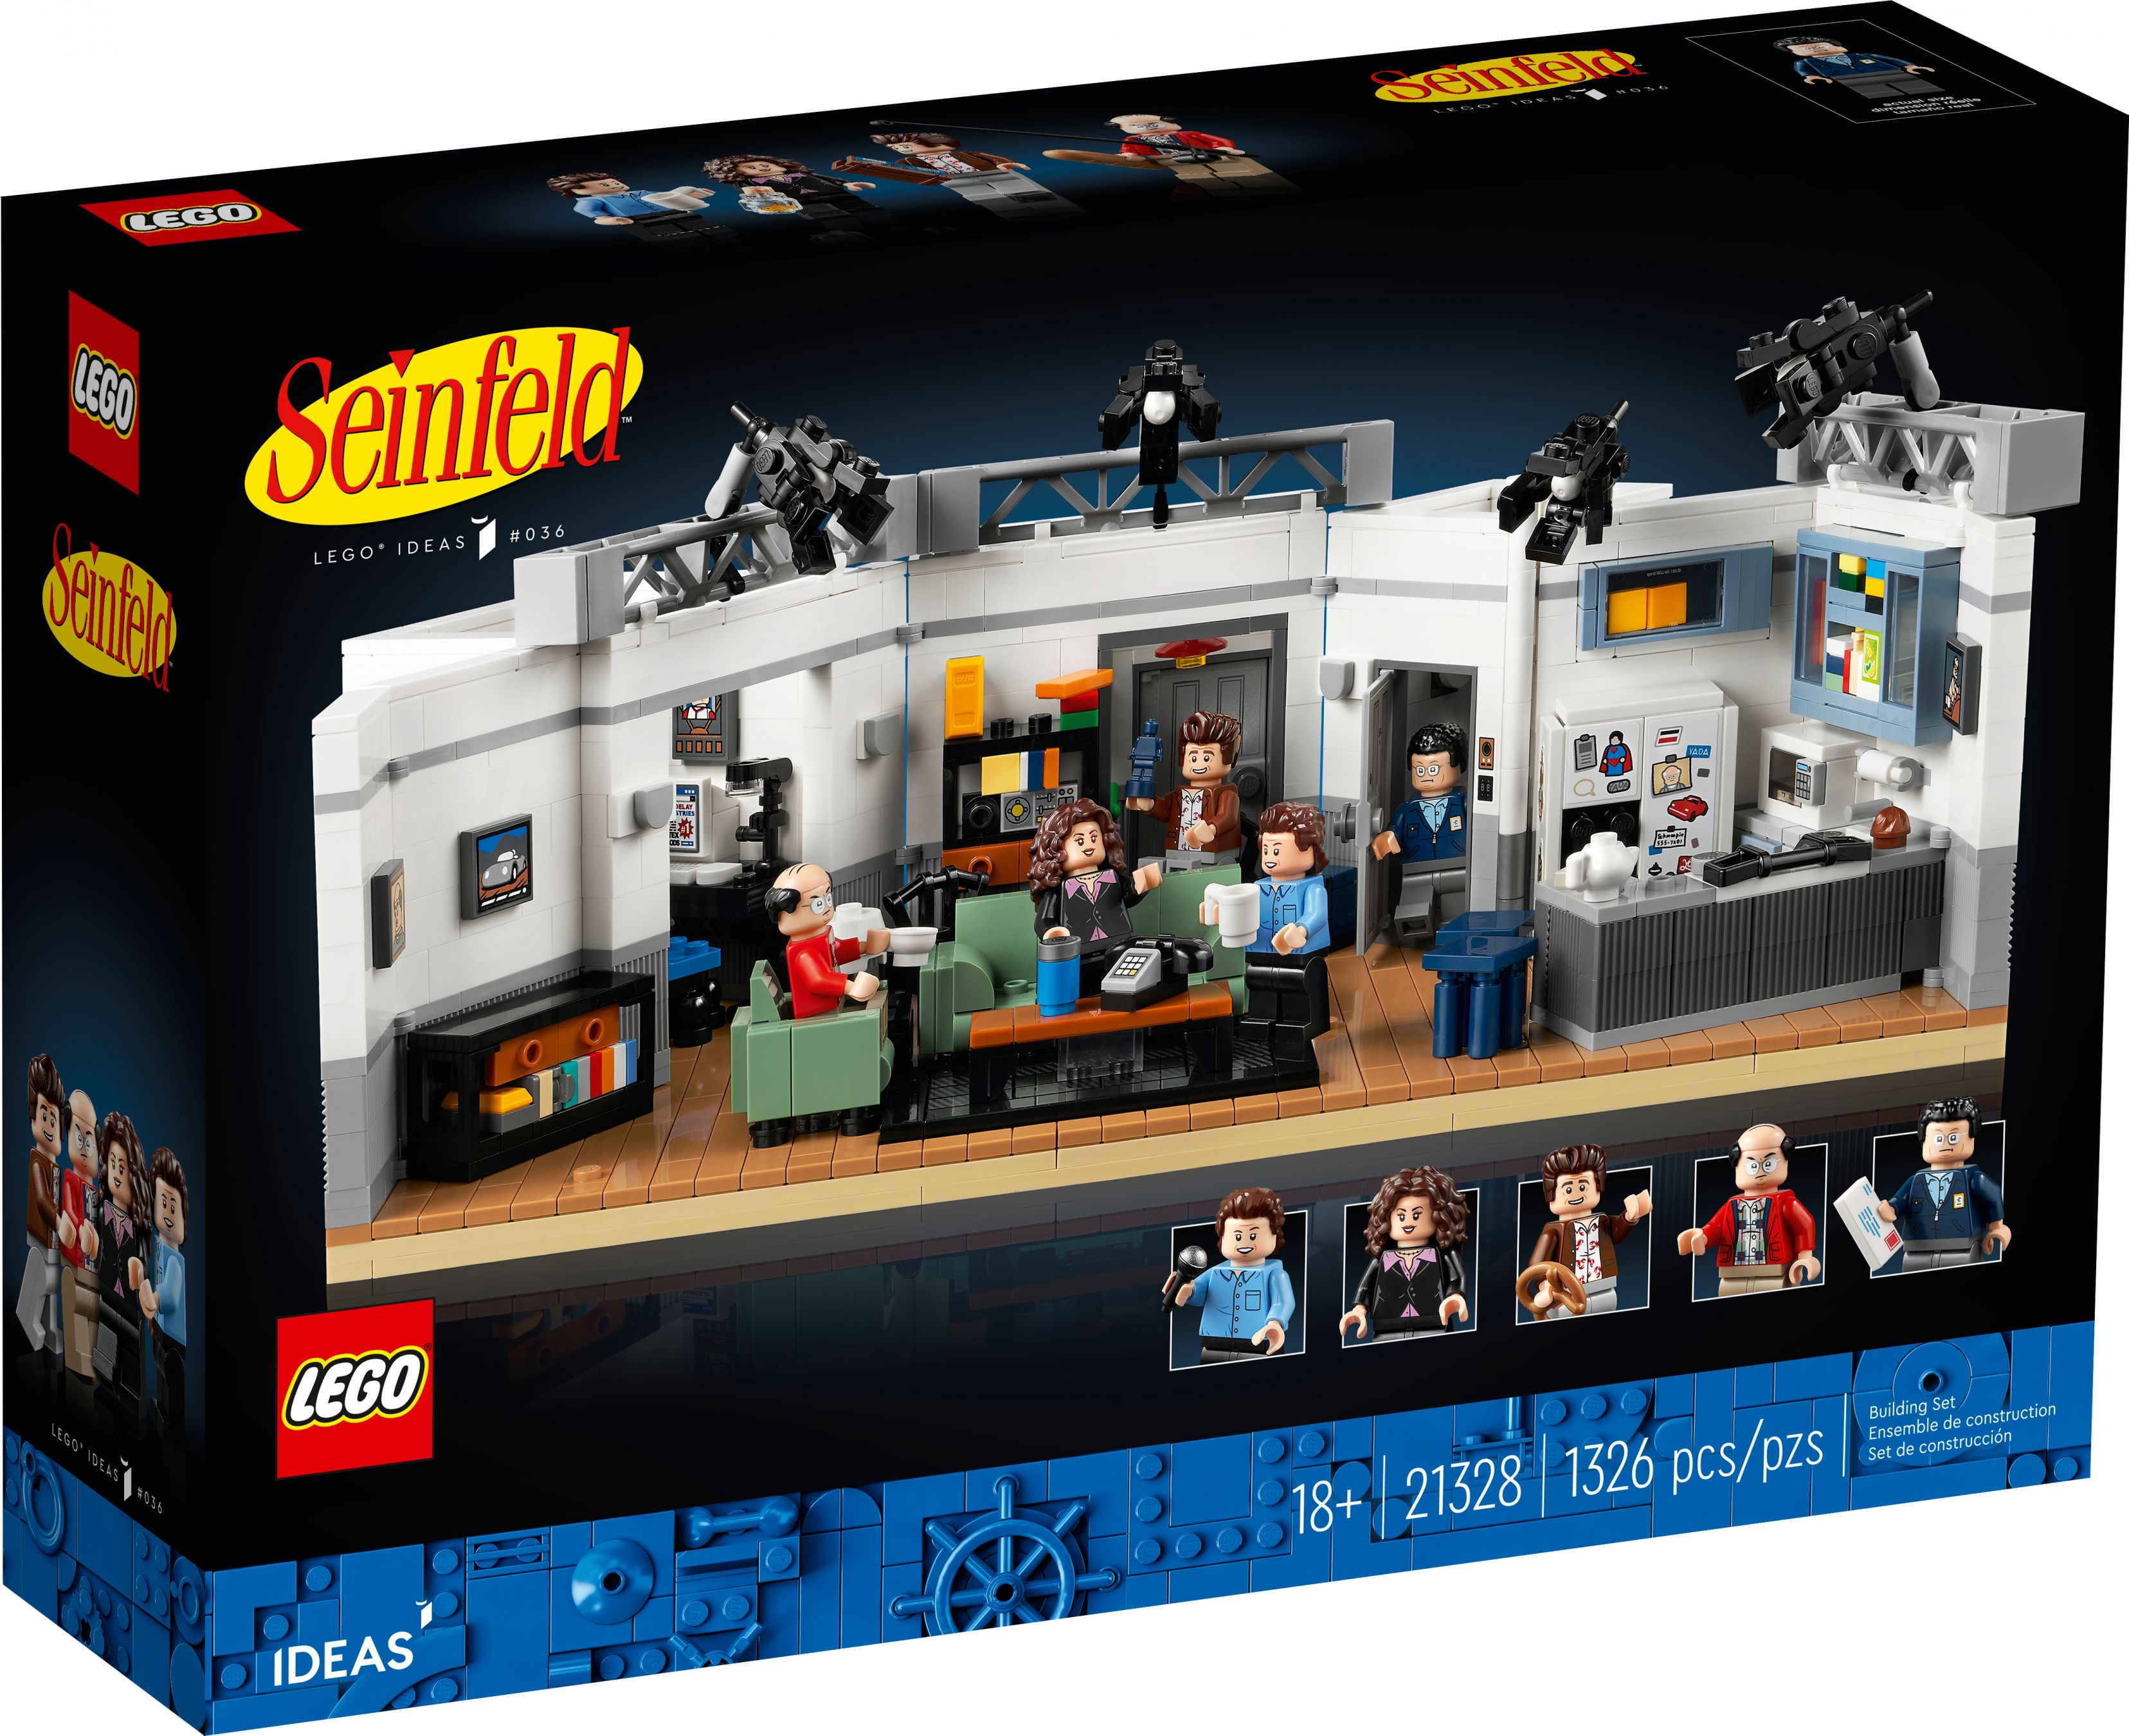 LEGO Ideas 21328 Seinfeld LEGO_21328_box1_v39.jpg